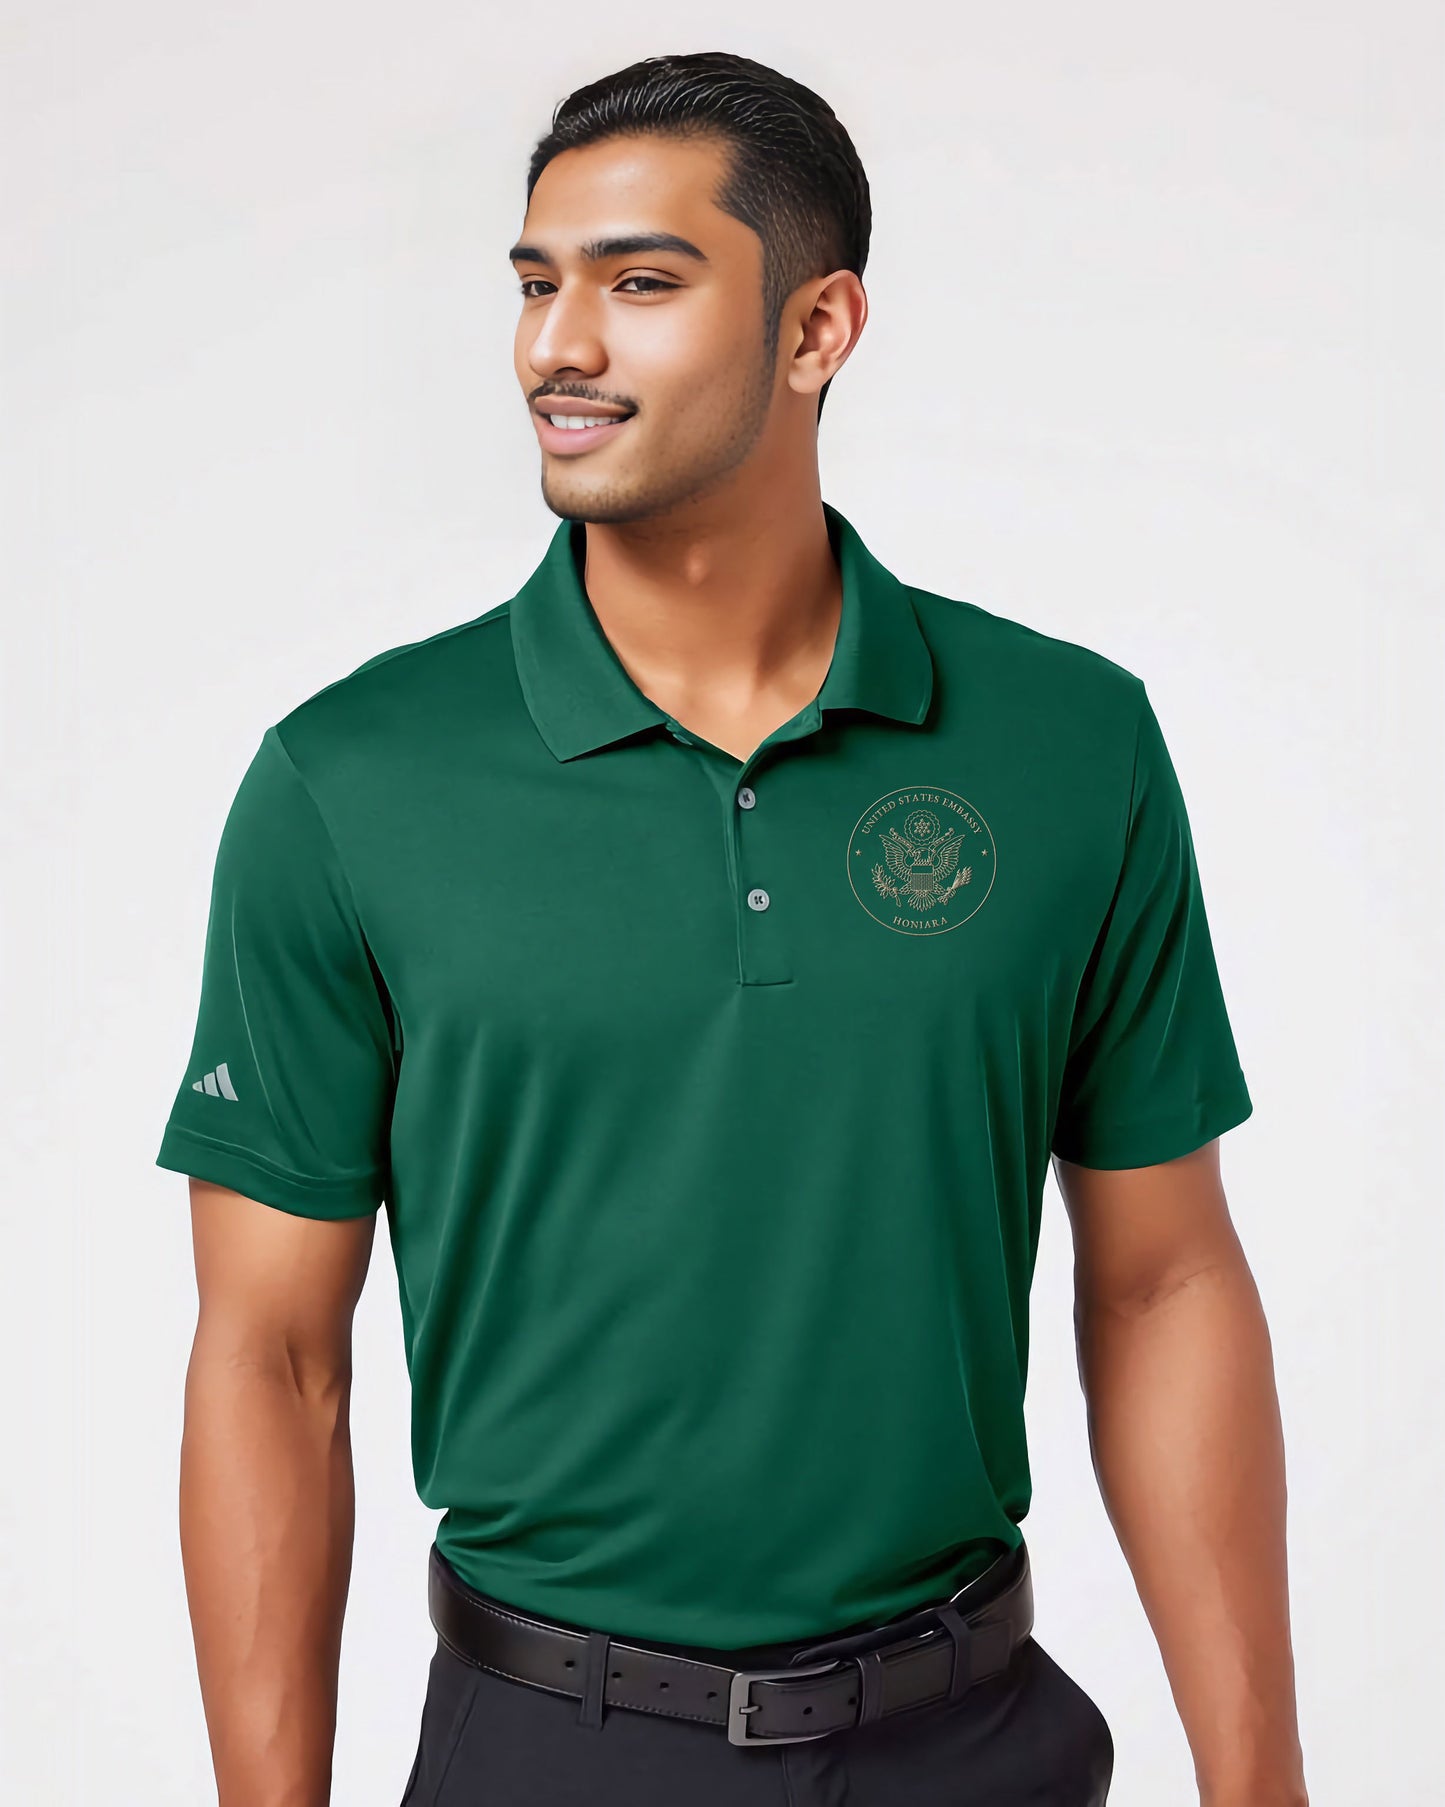 Adidas® Embroidered Polo, Gold Seal: Honiara